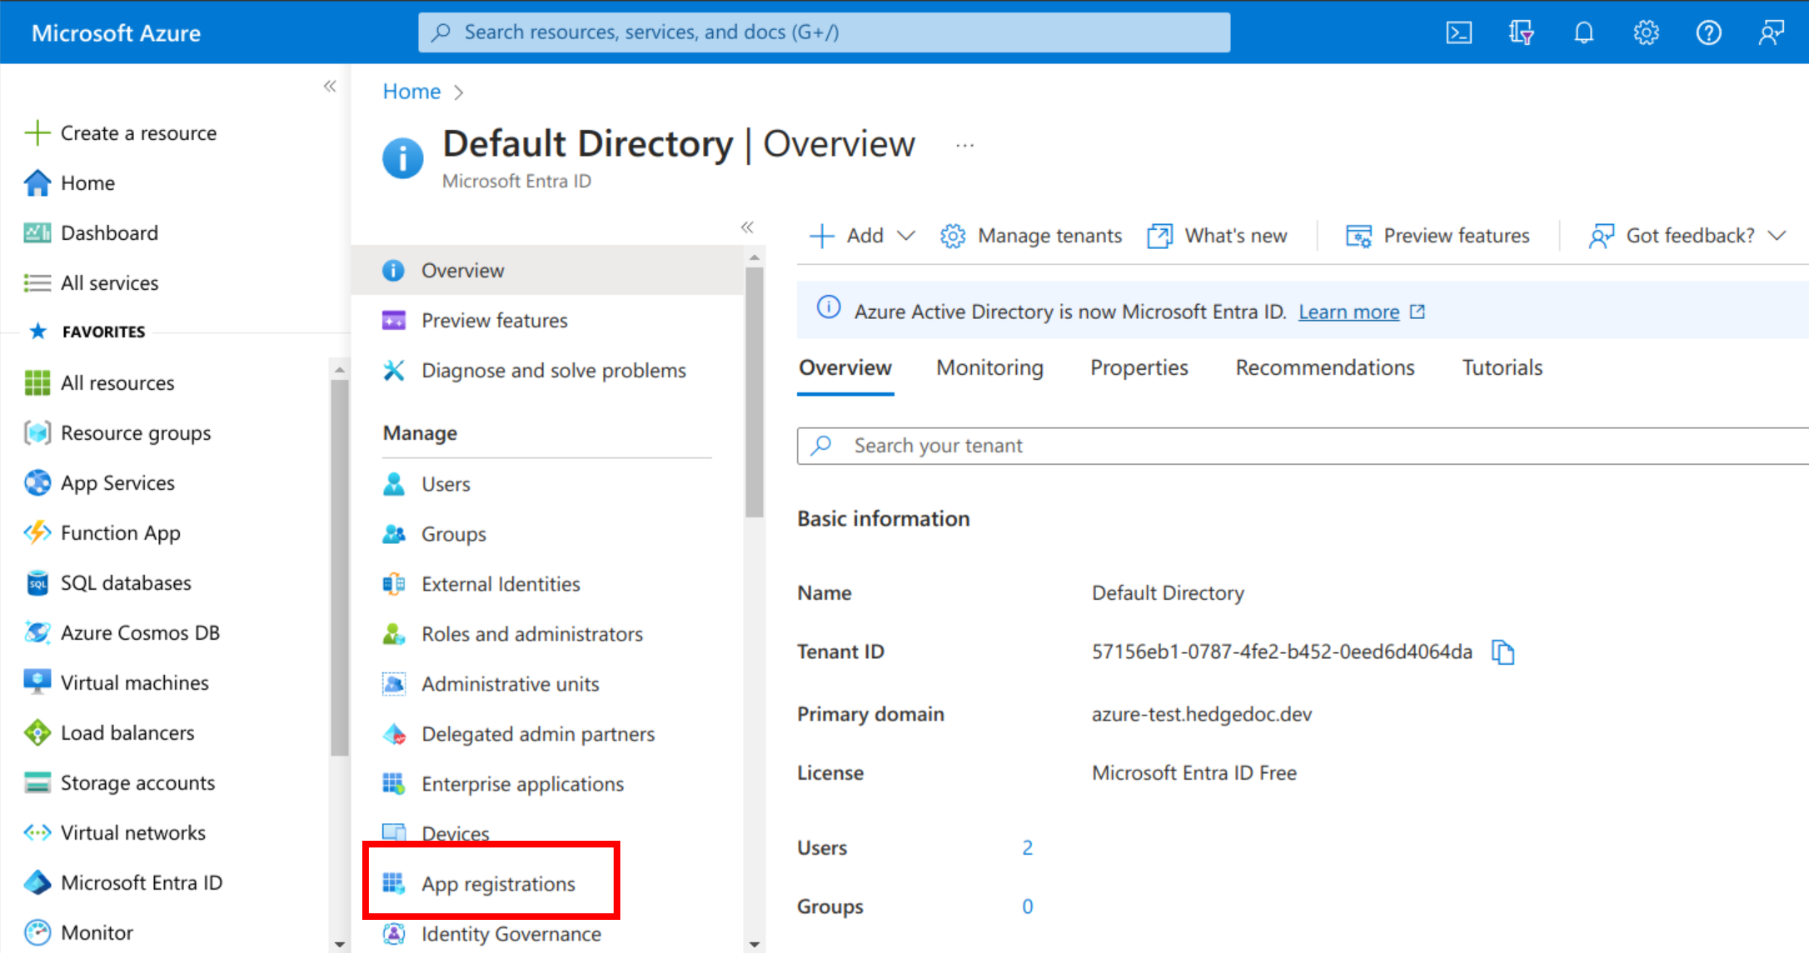 Azure Portal with Microsoft Entra ID service dashboard